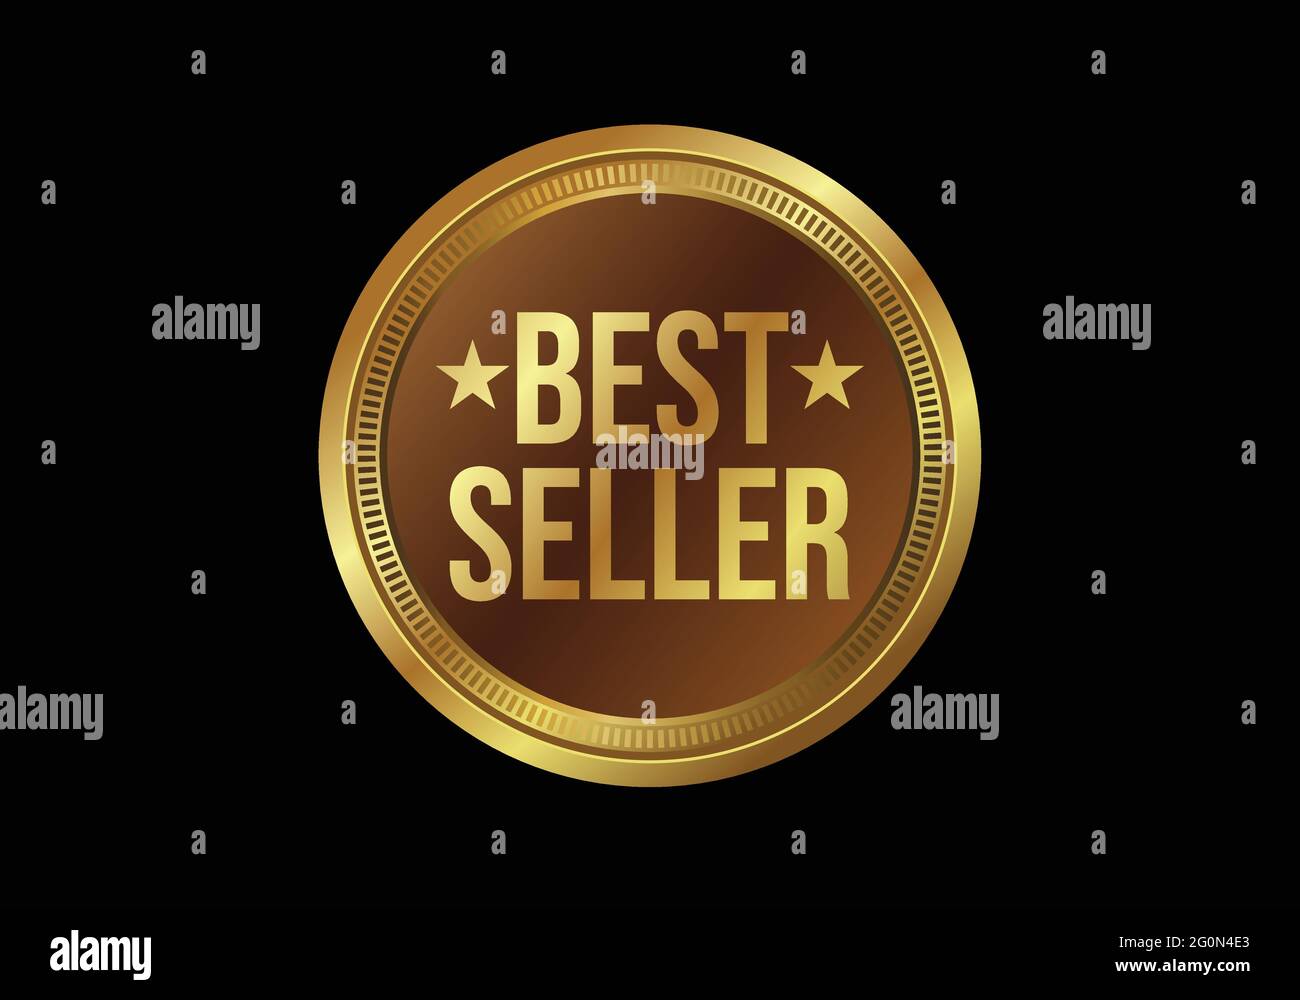 Best seller logo Stock Vector Images - Alamy